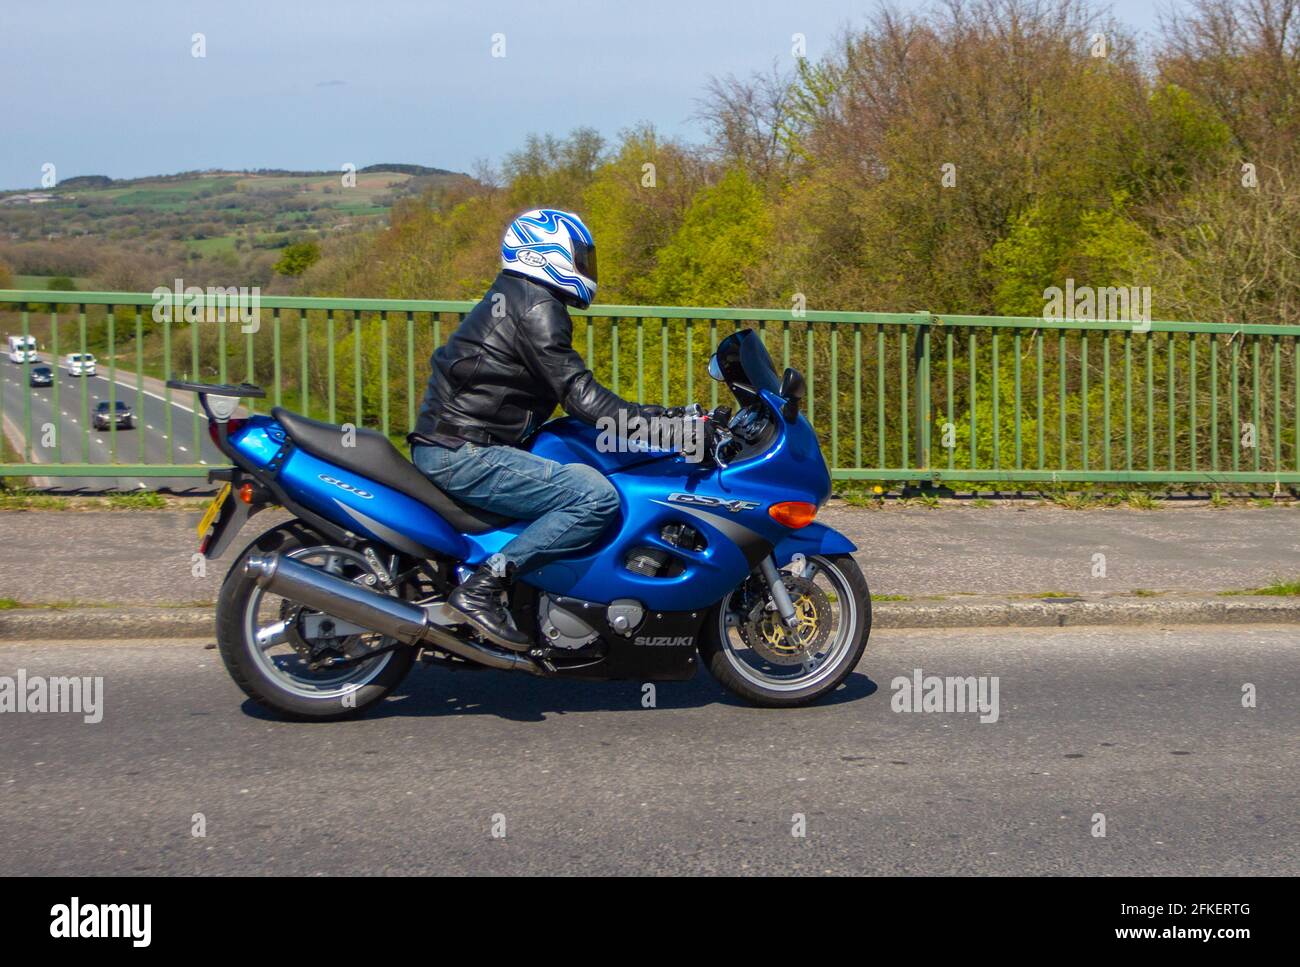 2000 Suzuki Gsx 600 Fy Motorbike rider; two wheeled transport, motorcycles, vehicle, roads, motorbikes, motorcycle bike riders motoring in Chorley, UK Stock Photo